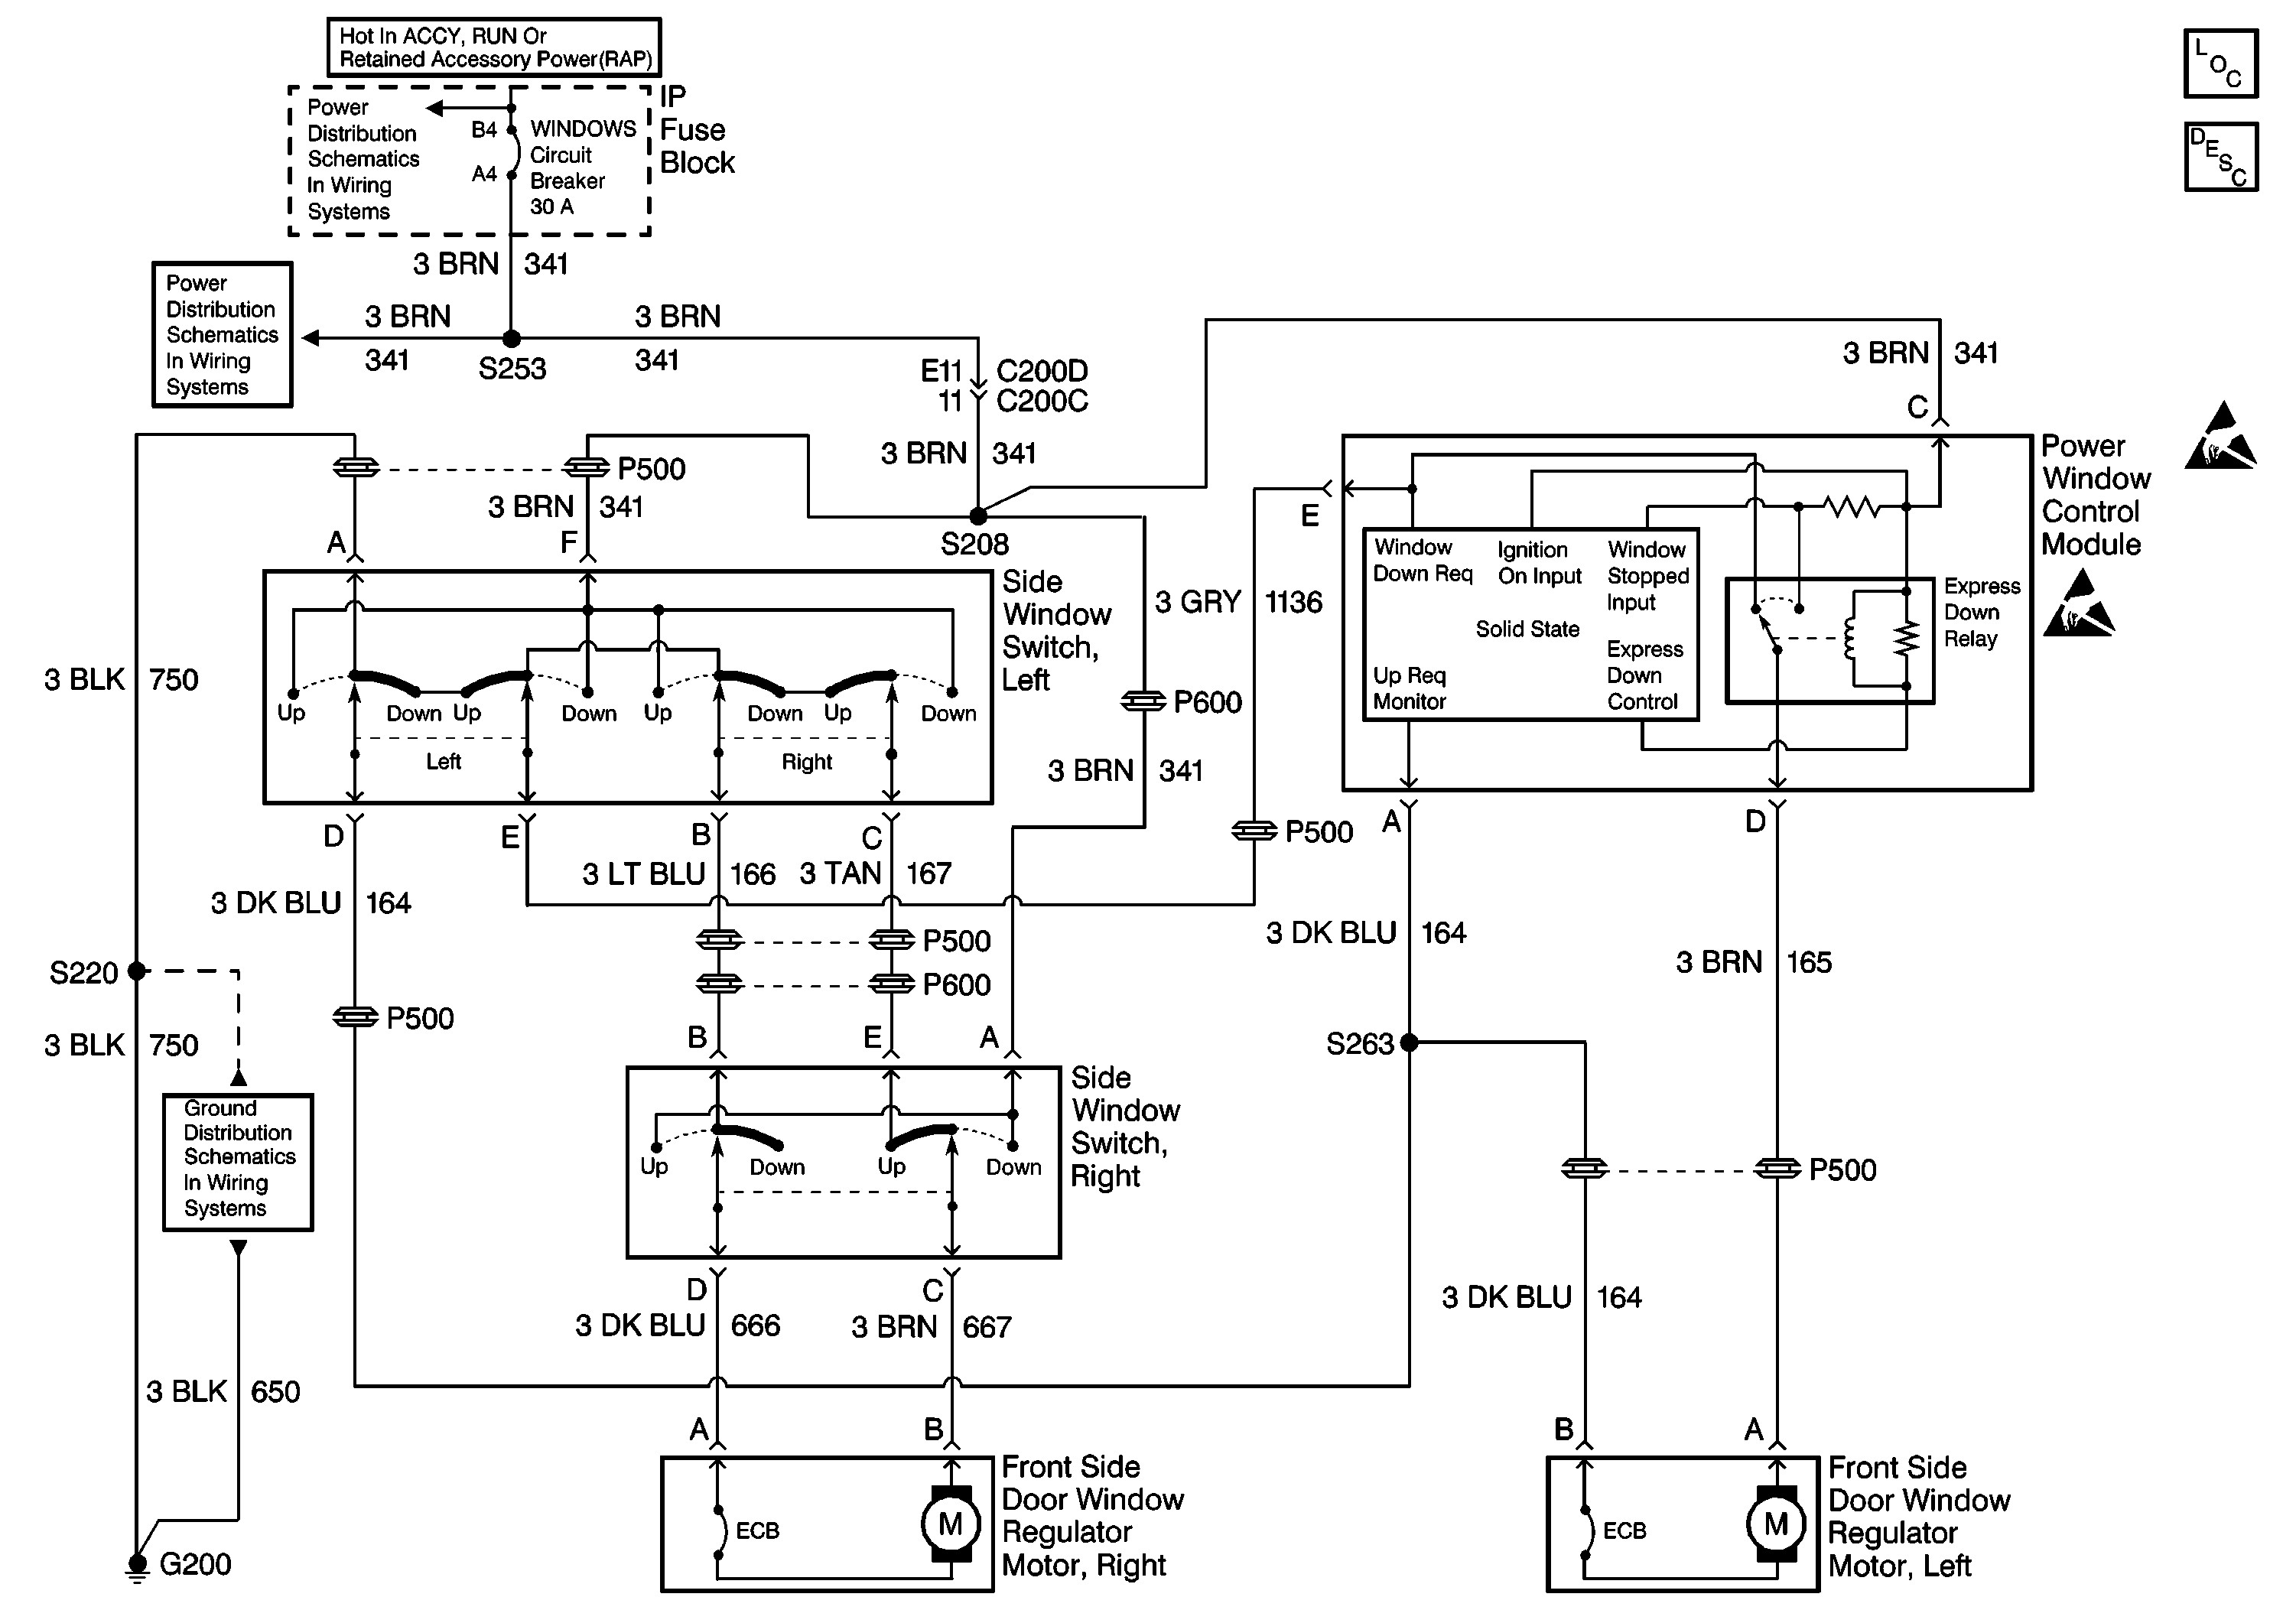 Power Windows Wiring Diagram 2006 Gto Power Windows Wiring Diagram Wiring Diagram Paper Of Power Windows Wiring Diagram